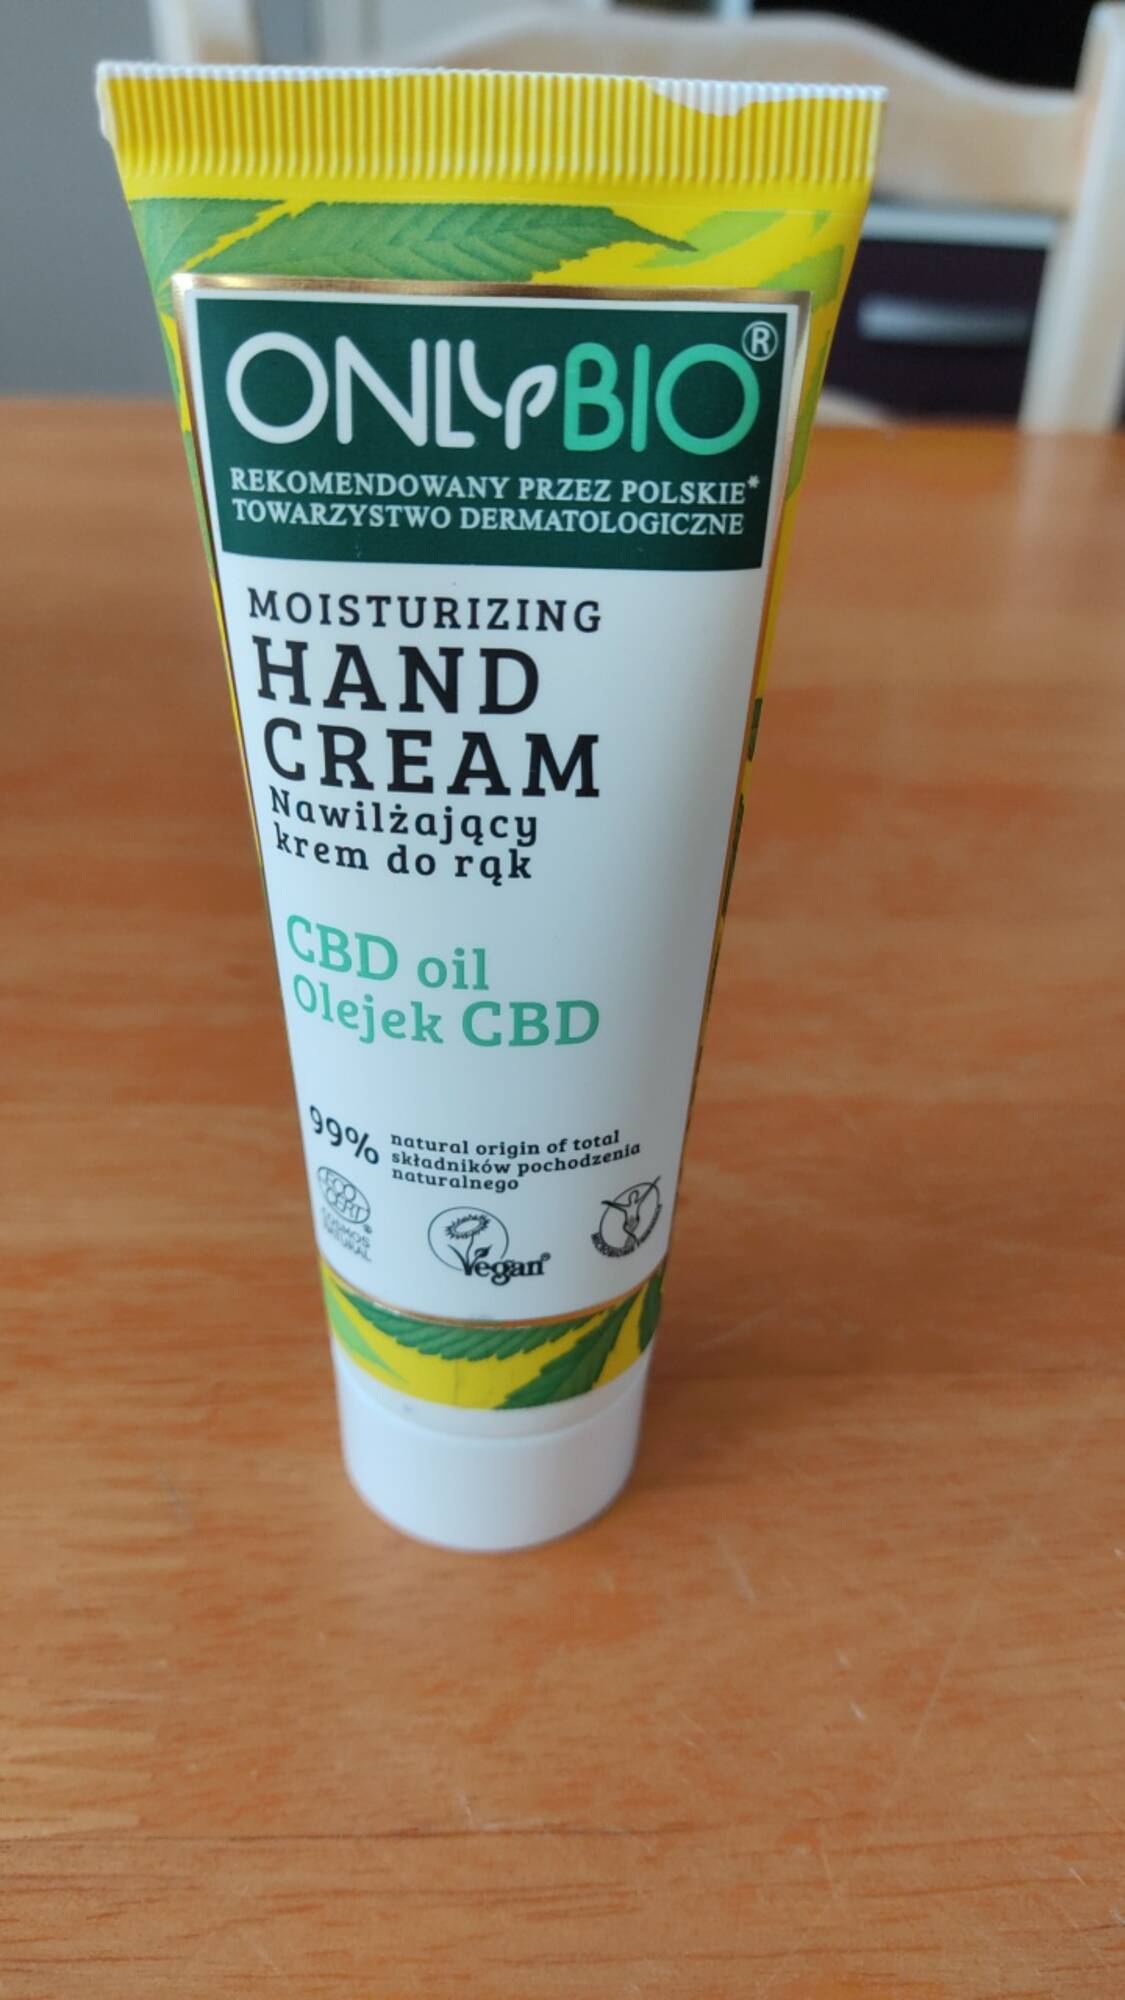 ONLYBIO - Moisturizing hand cream